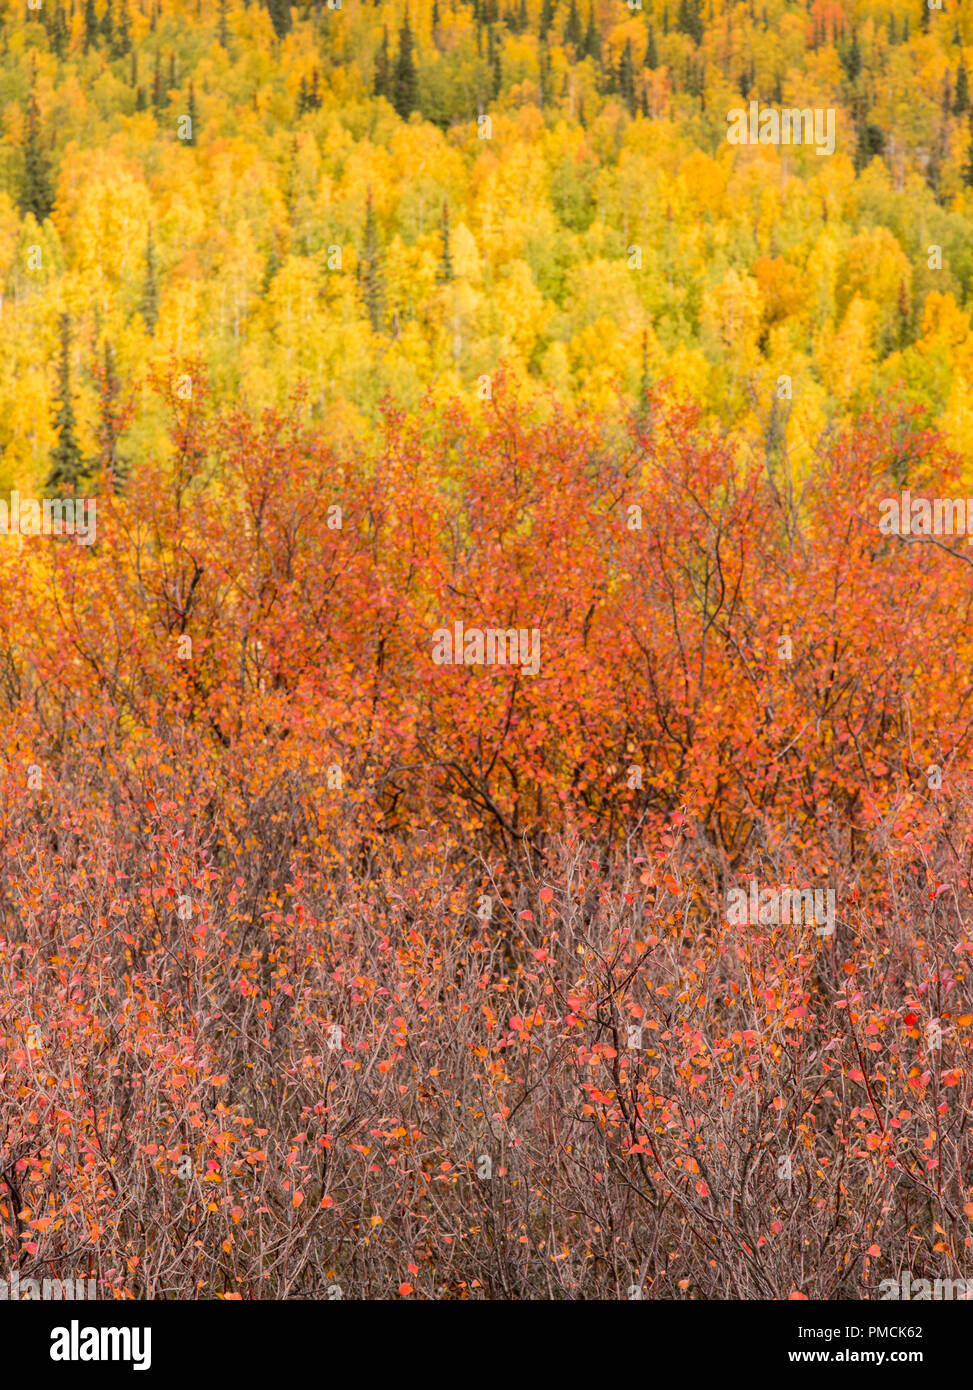 Autumn colors in the Brooks Range, Arctic Alaska. Stock Photo